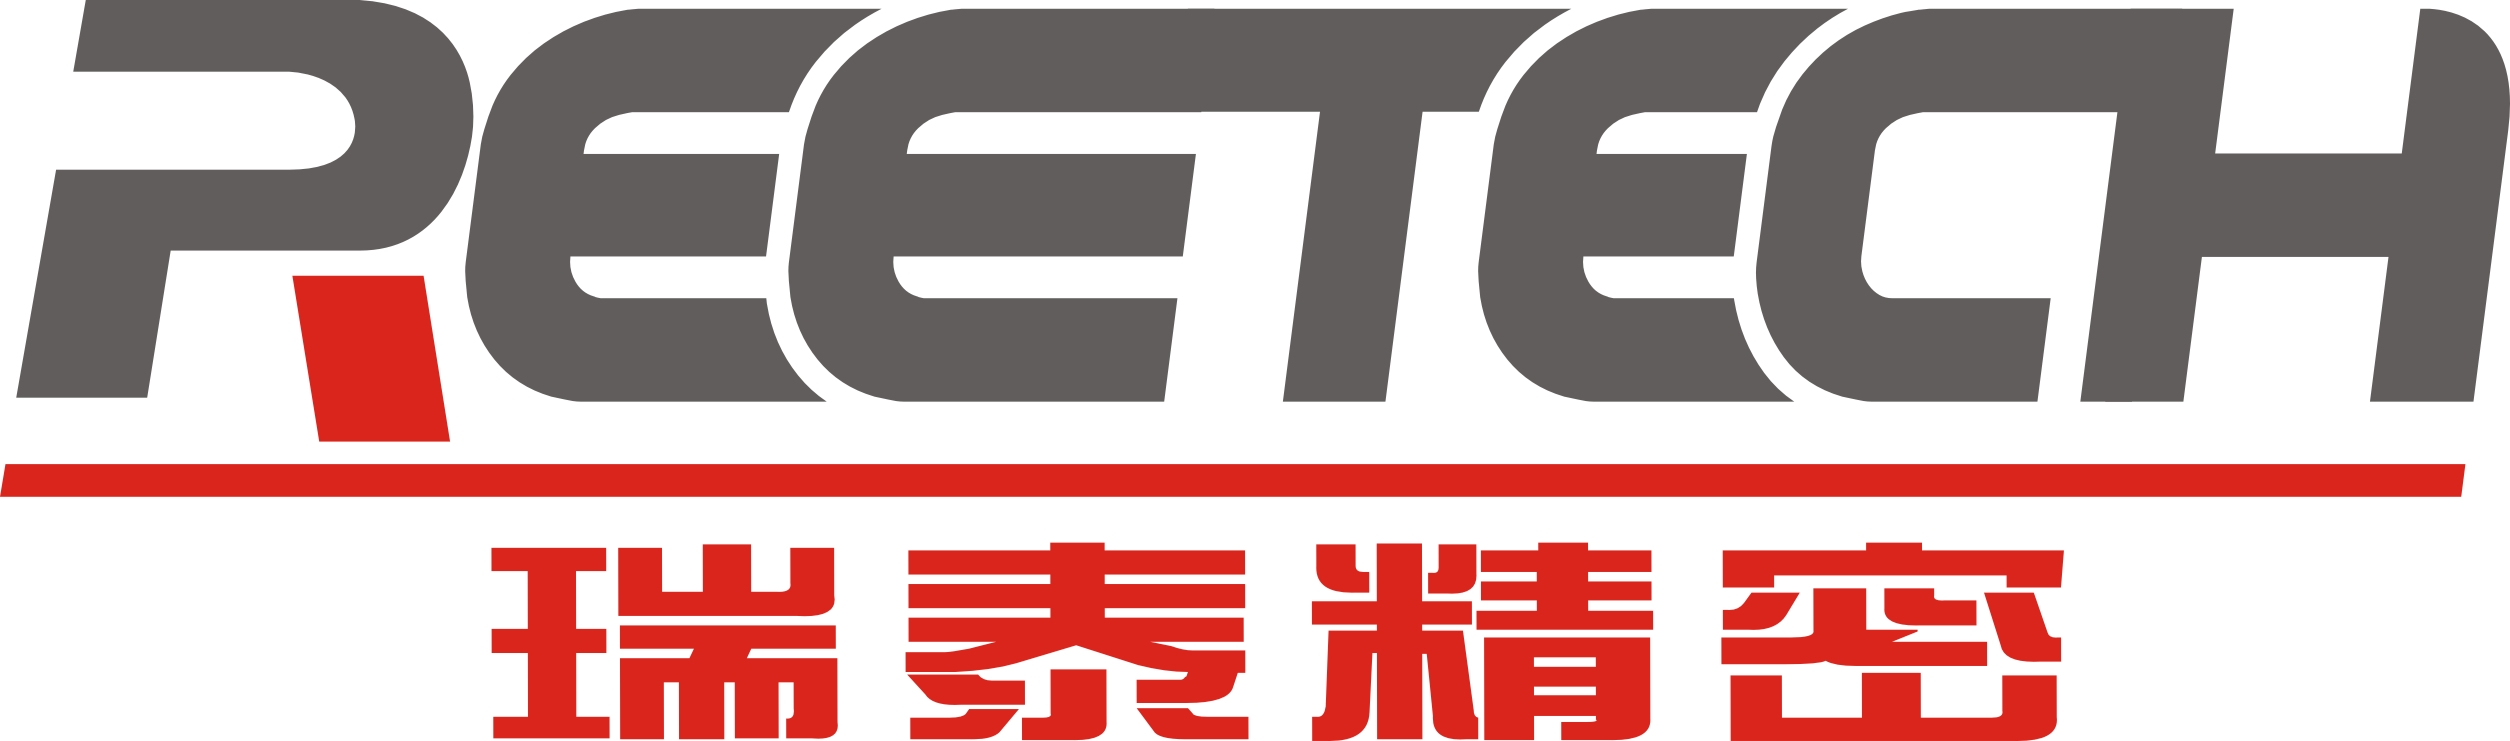 Shenzhen Reetech Precision Components Ltd.